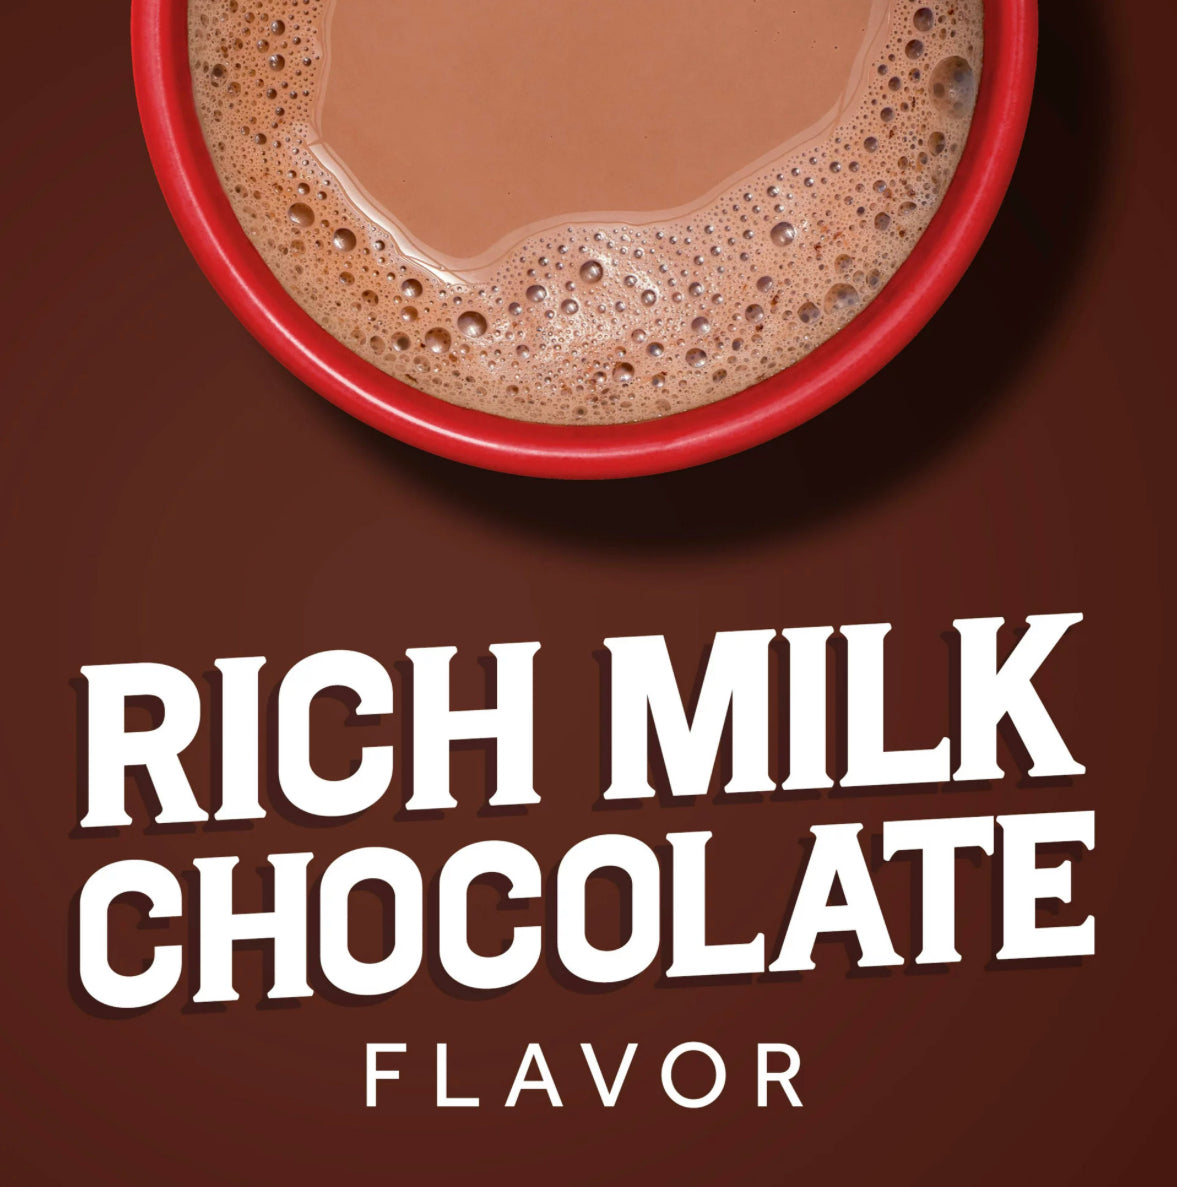 Nestle Hot Cocoa Rich Milk Chocolate Flavored Mix 6.829oz 8ct